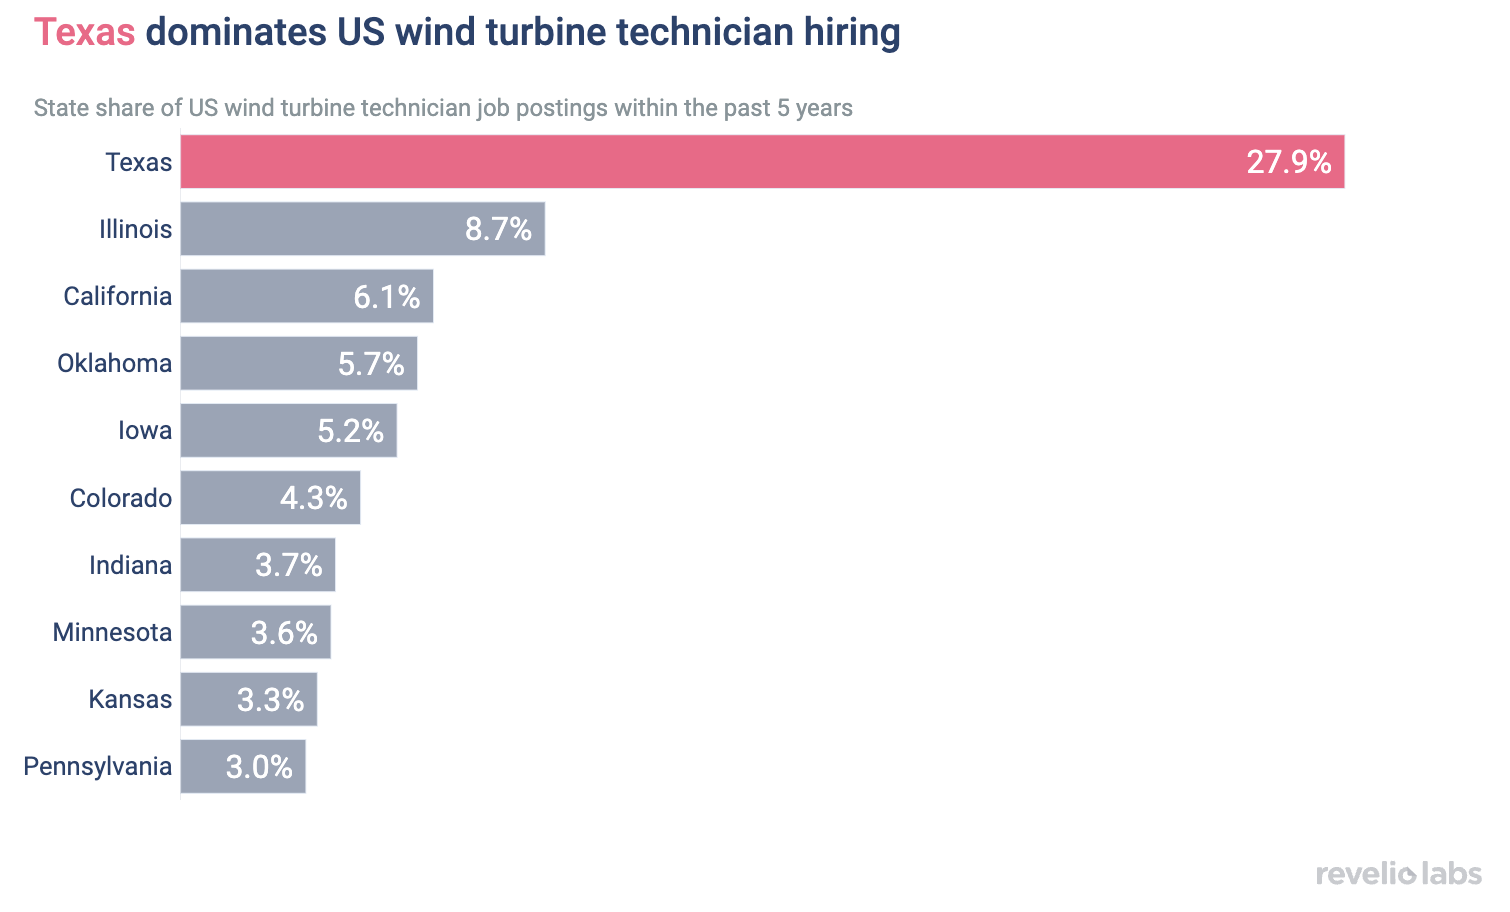 Texas dominates US wind turbine technician hiring